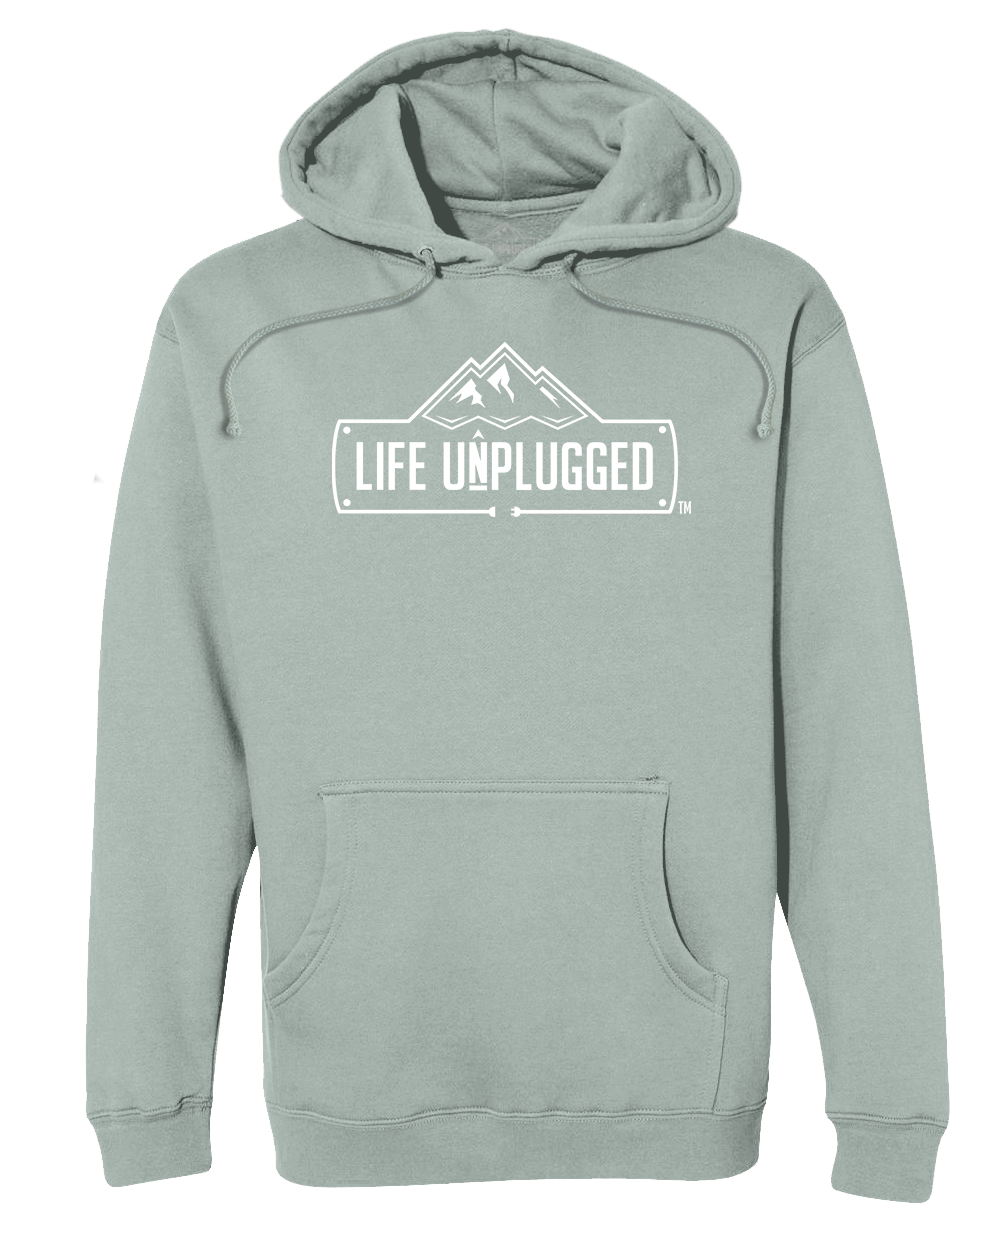 LIFE UNPLUGGED LOGO Premium Heavyweight Hooded Sweatshirt